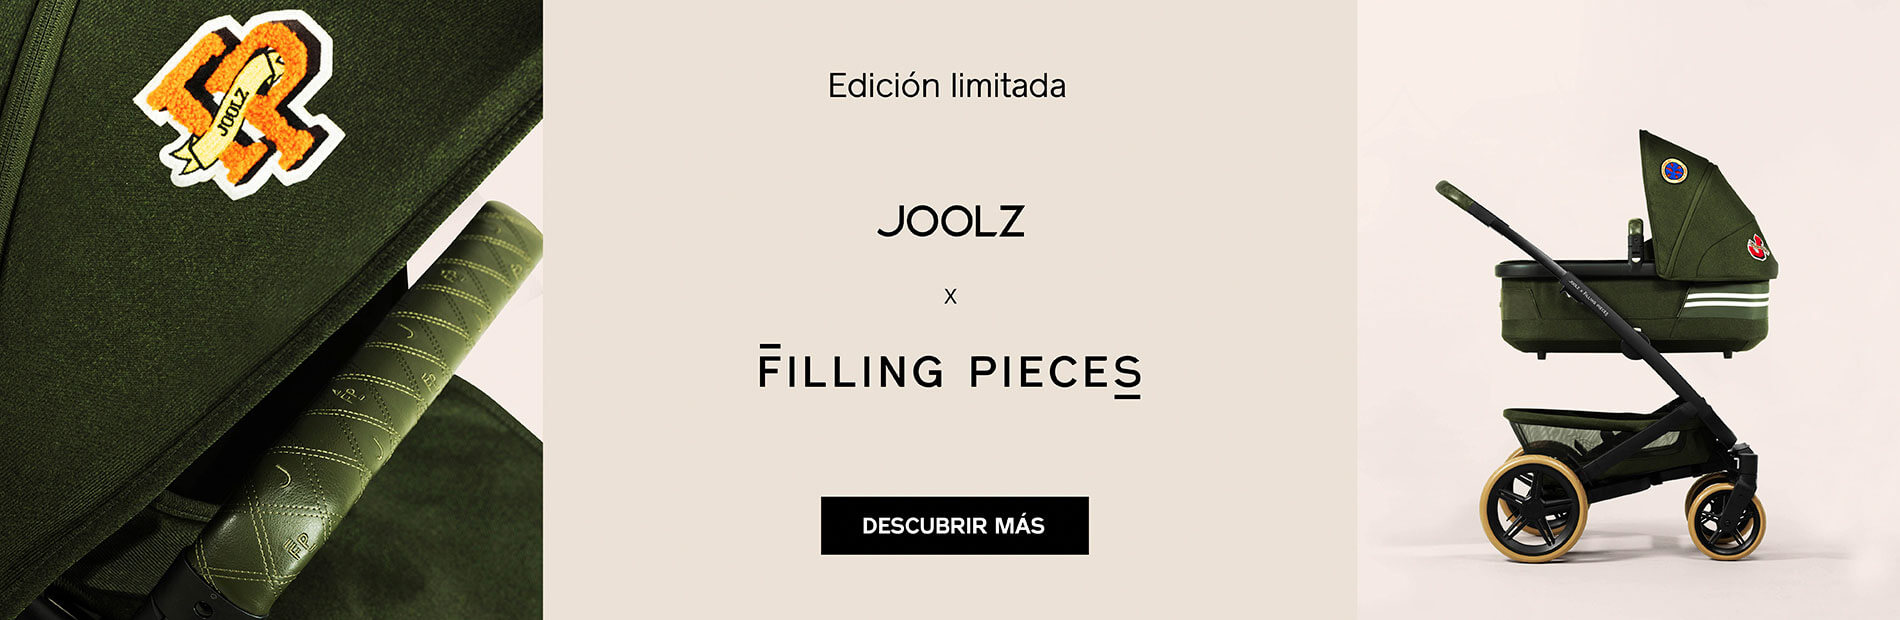 Joolz geo3 filling pieces